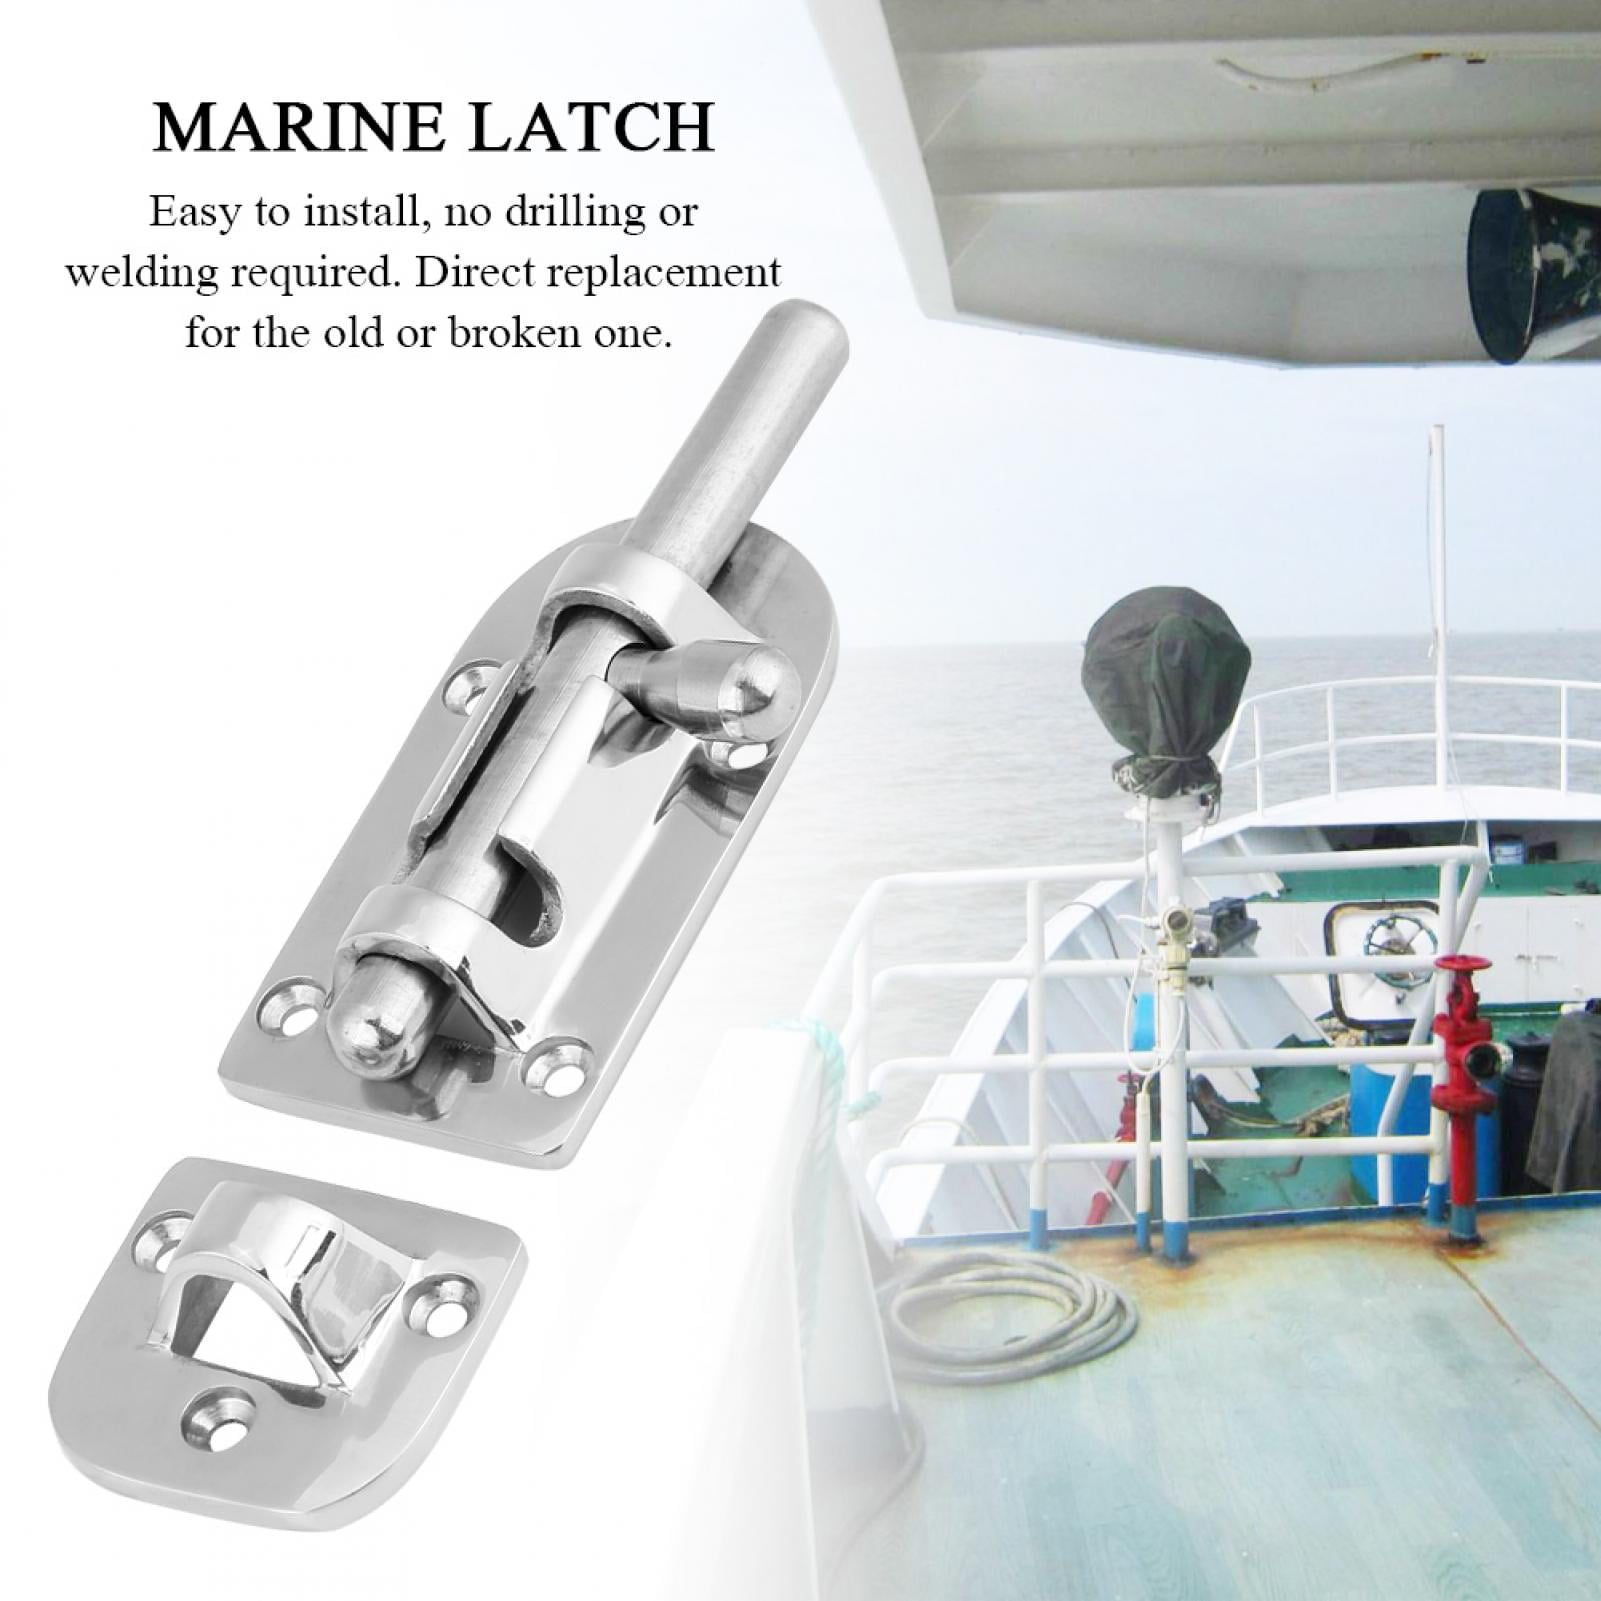 60mm Boat Door Lock Latch,Stainless Steel Marine Boat Door Window Lock Latch Slide Barrel Bolt Clasp